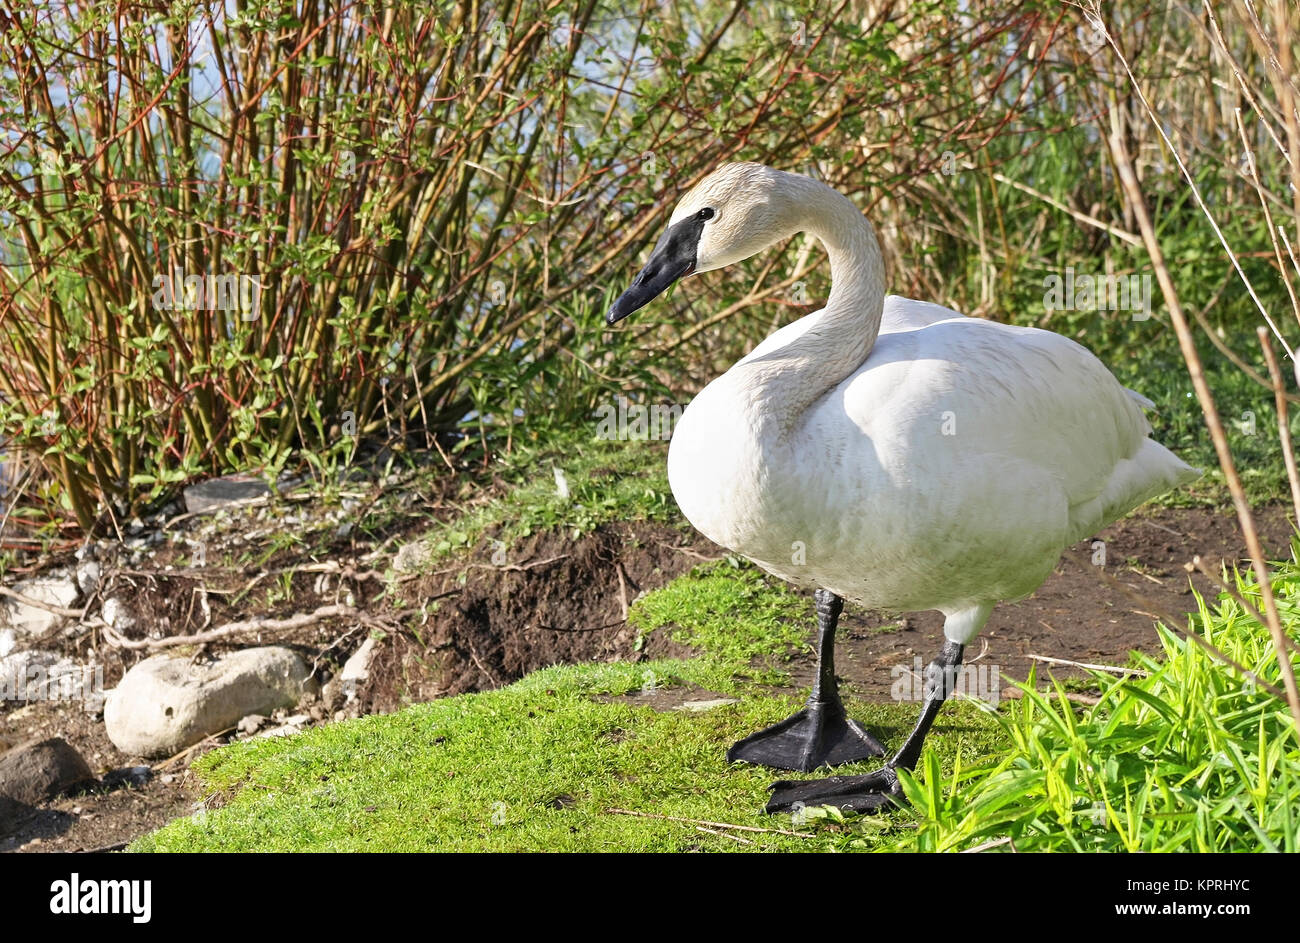 Wild Trumpeter Swan standing in natural habitat Stock Photo